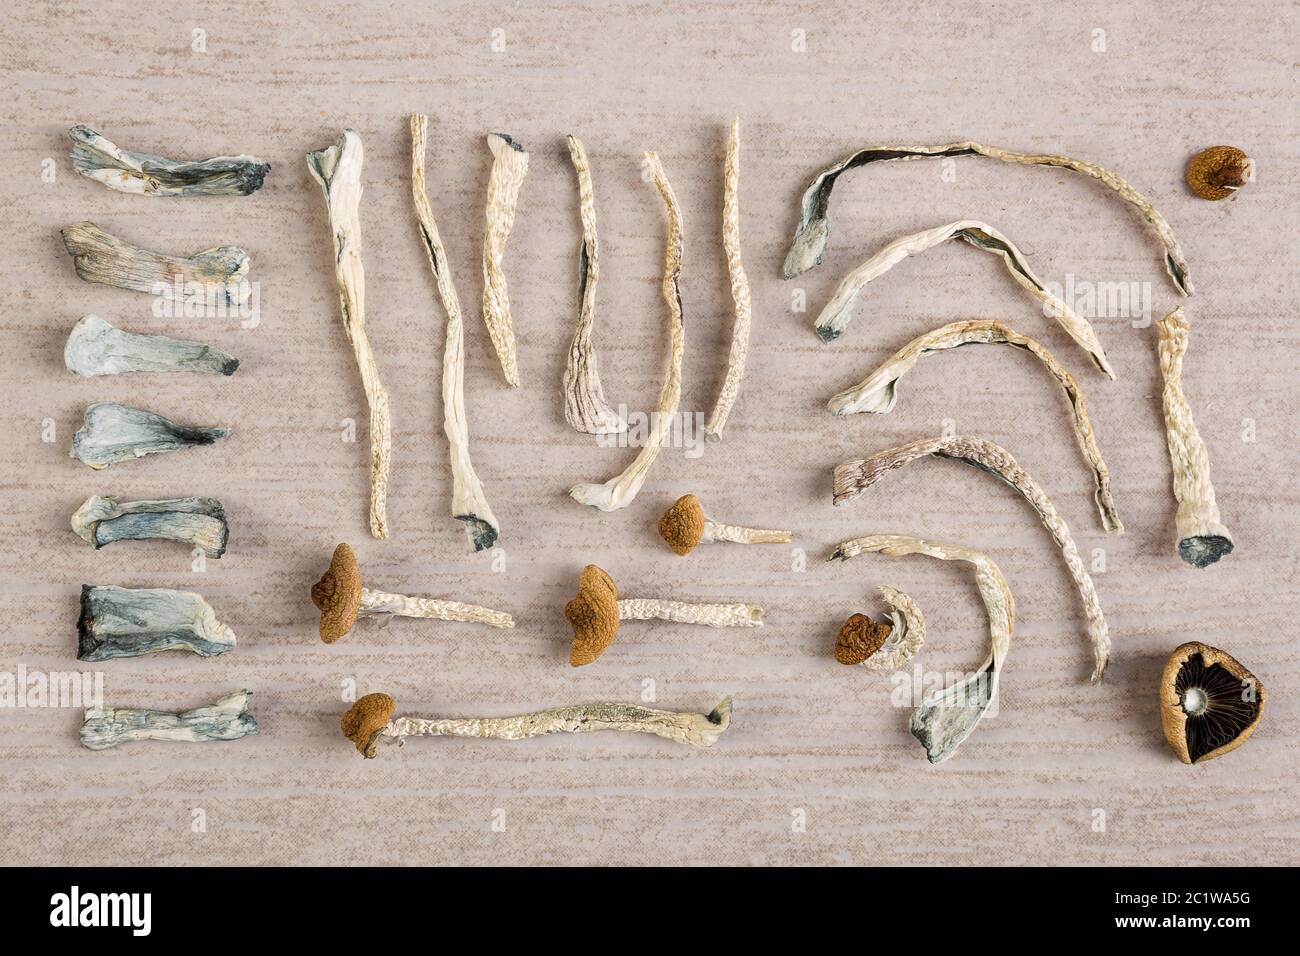 Dry magic mushrooms. Stock Photo